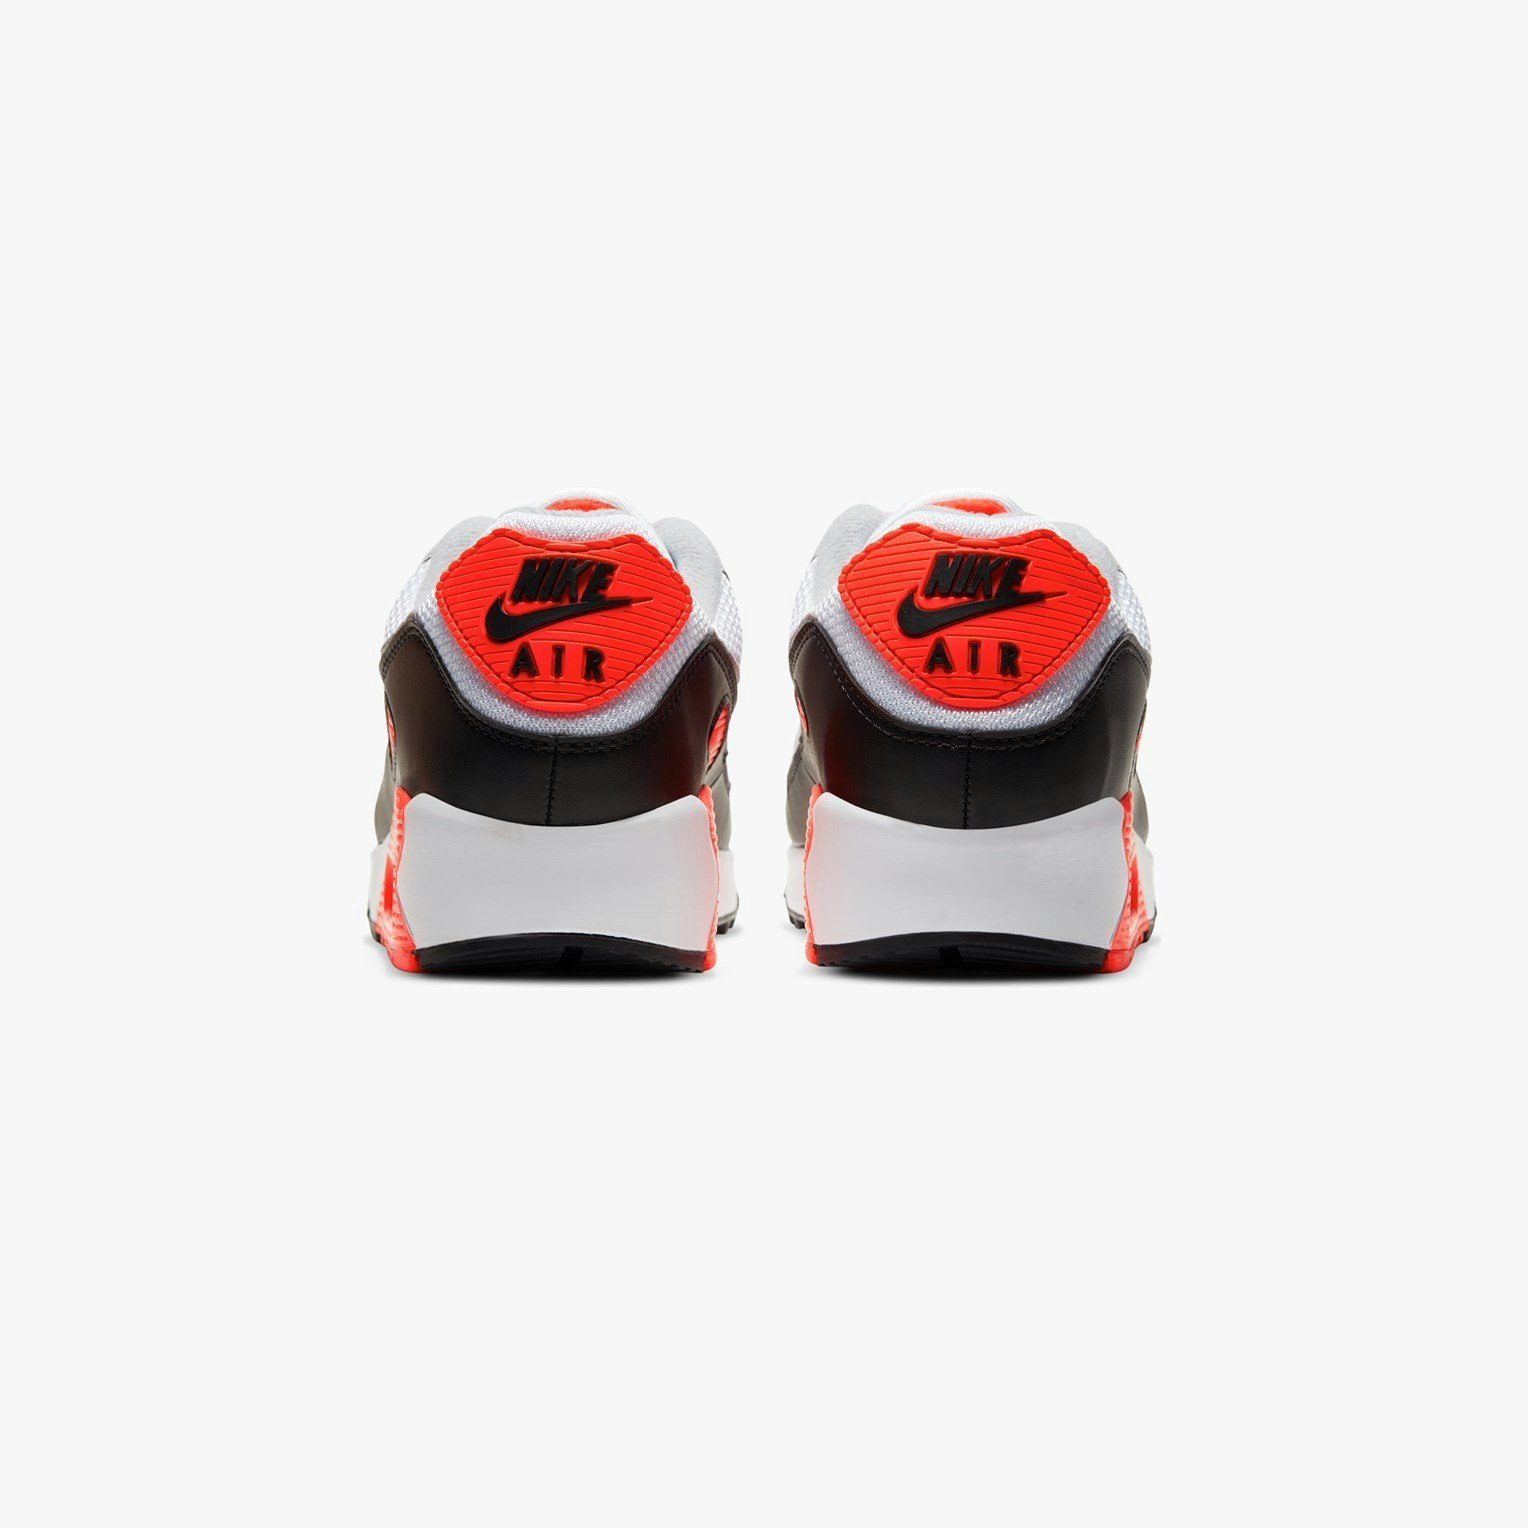 Nike Air Max 90 “Infrared”